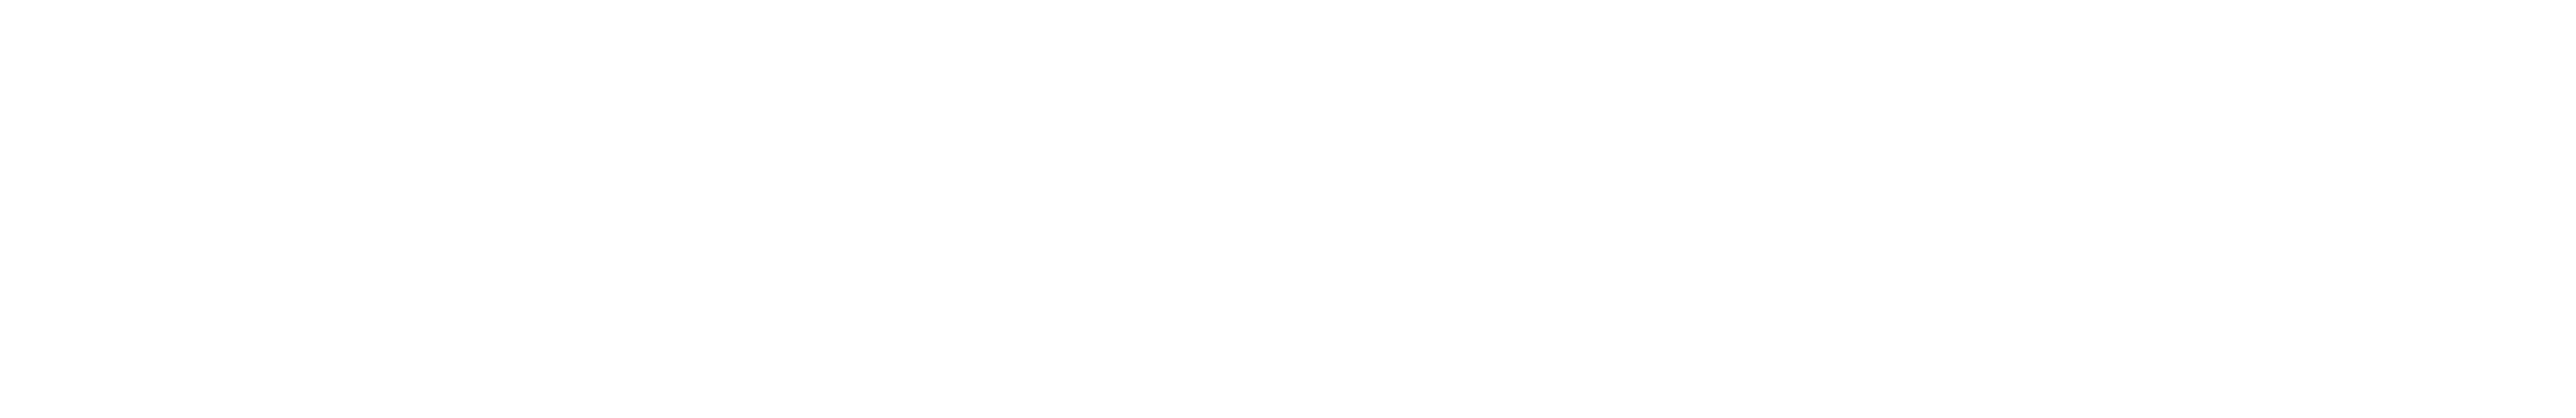 IB Women in Insurance Atlanta Logo